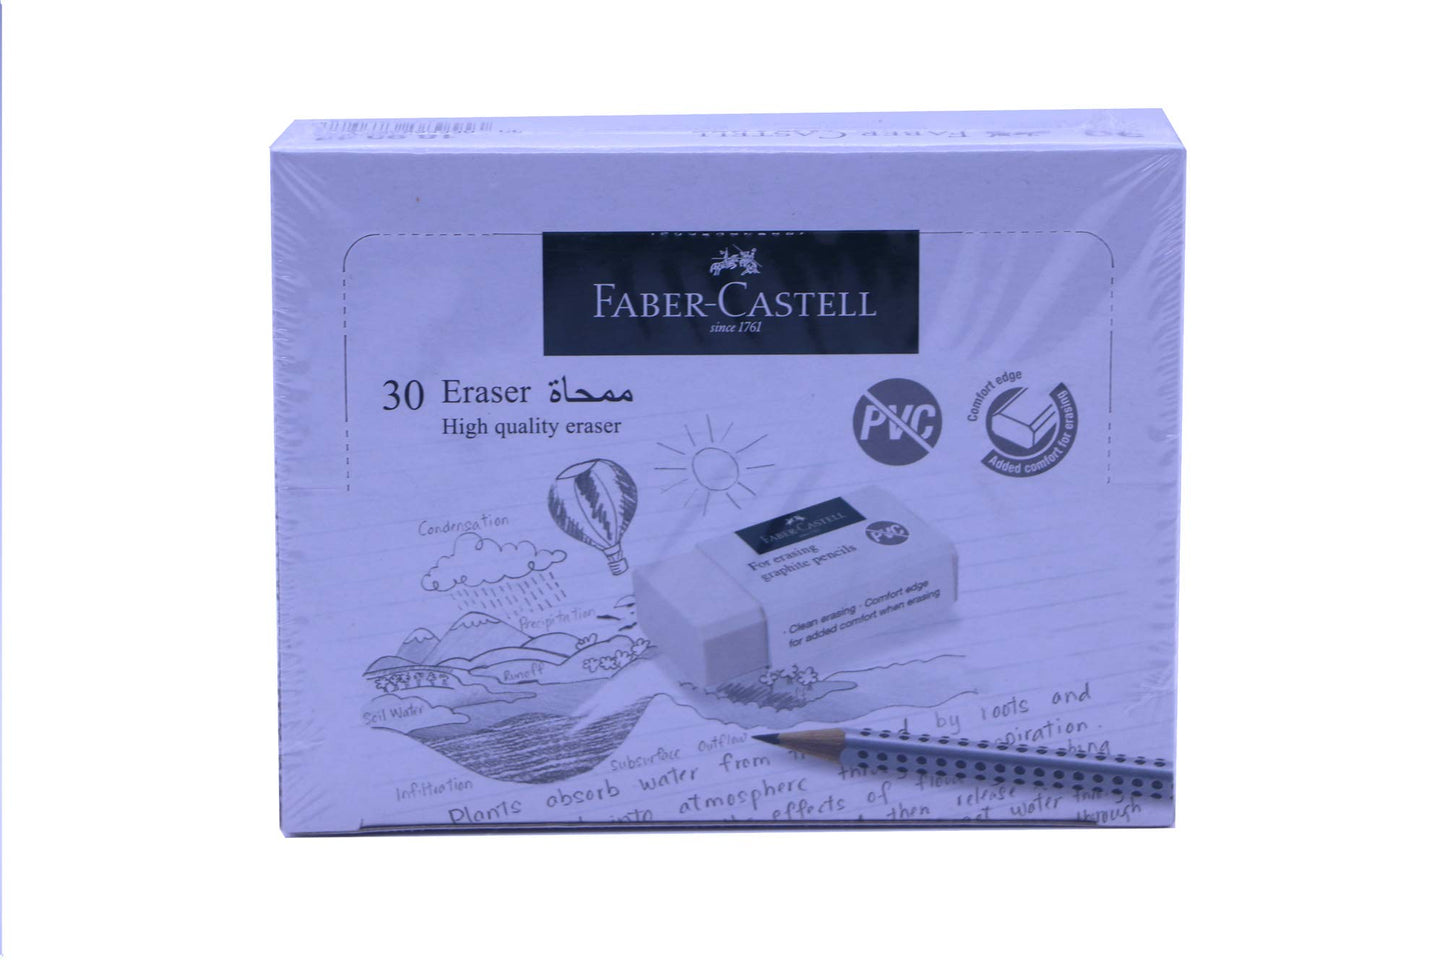 FABER-CASTELL PVC-FREE ERASER MEDIUM BOX OF 30PC